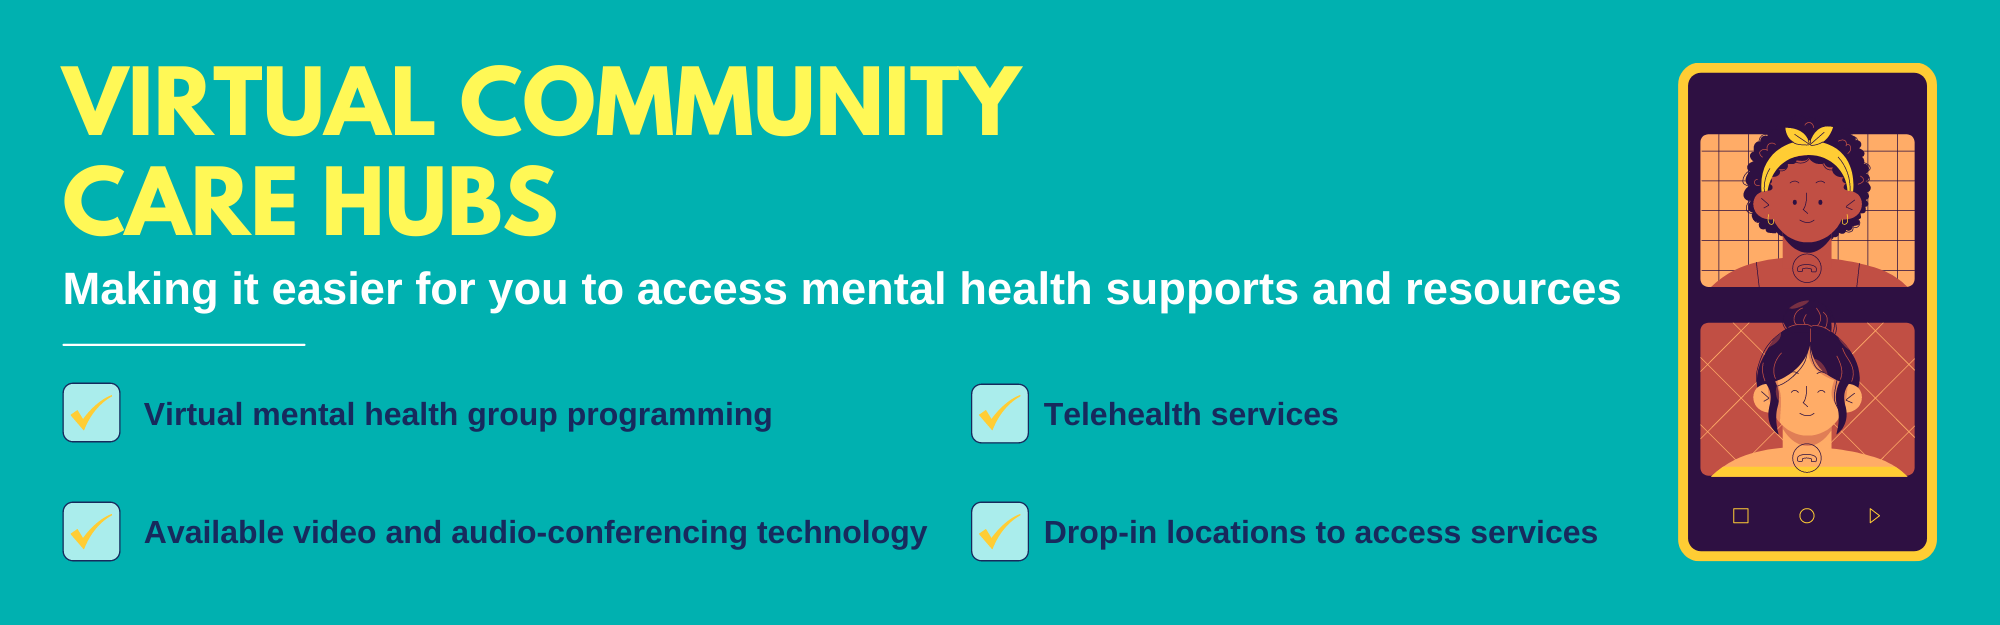 Virtual Community Care Hubs